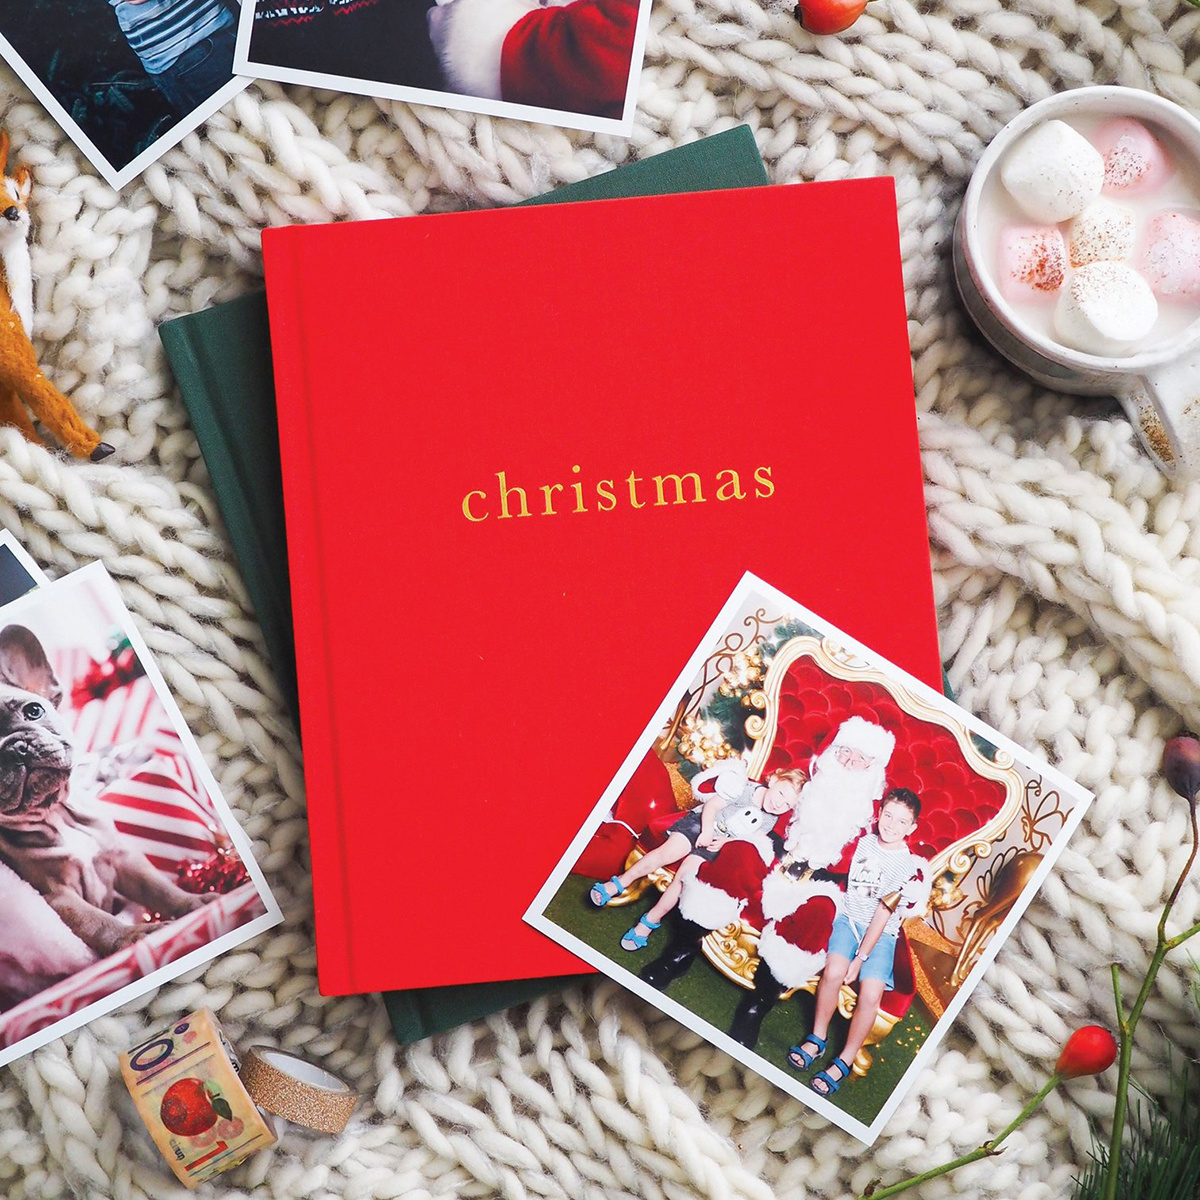 Write To Me Write to Me - Christmas, Family Book, Red